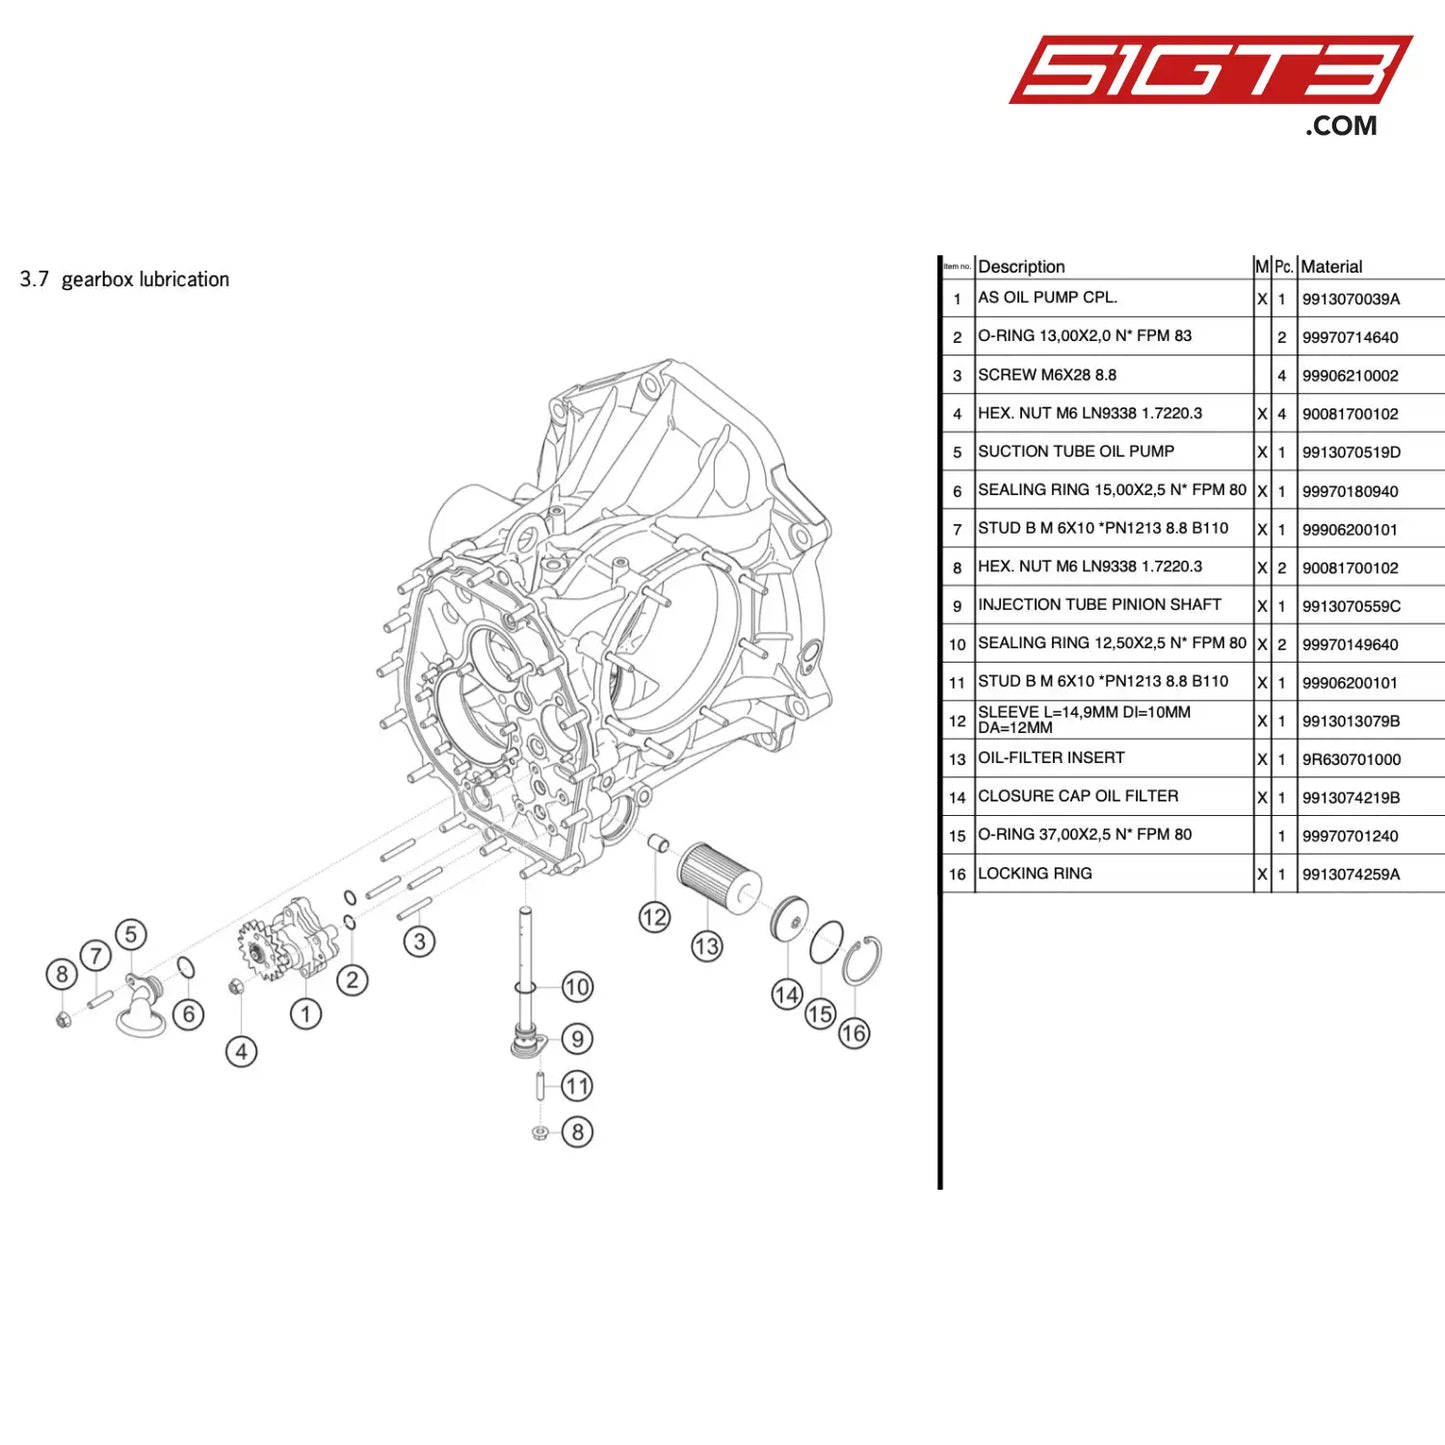 Suction Tube Oil Pump - 9913070519D [Porsche 911 Gt3 R Type 991 (Gen 1)] Gearbox Lubrication